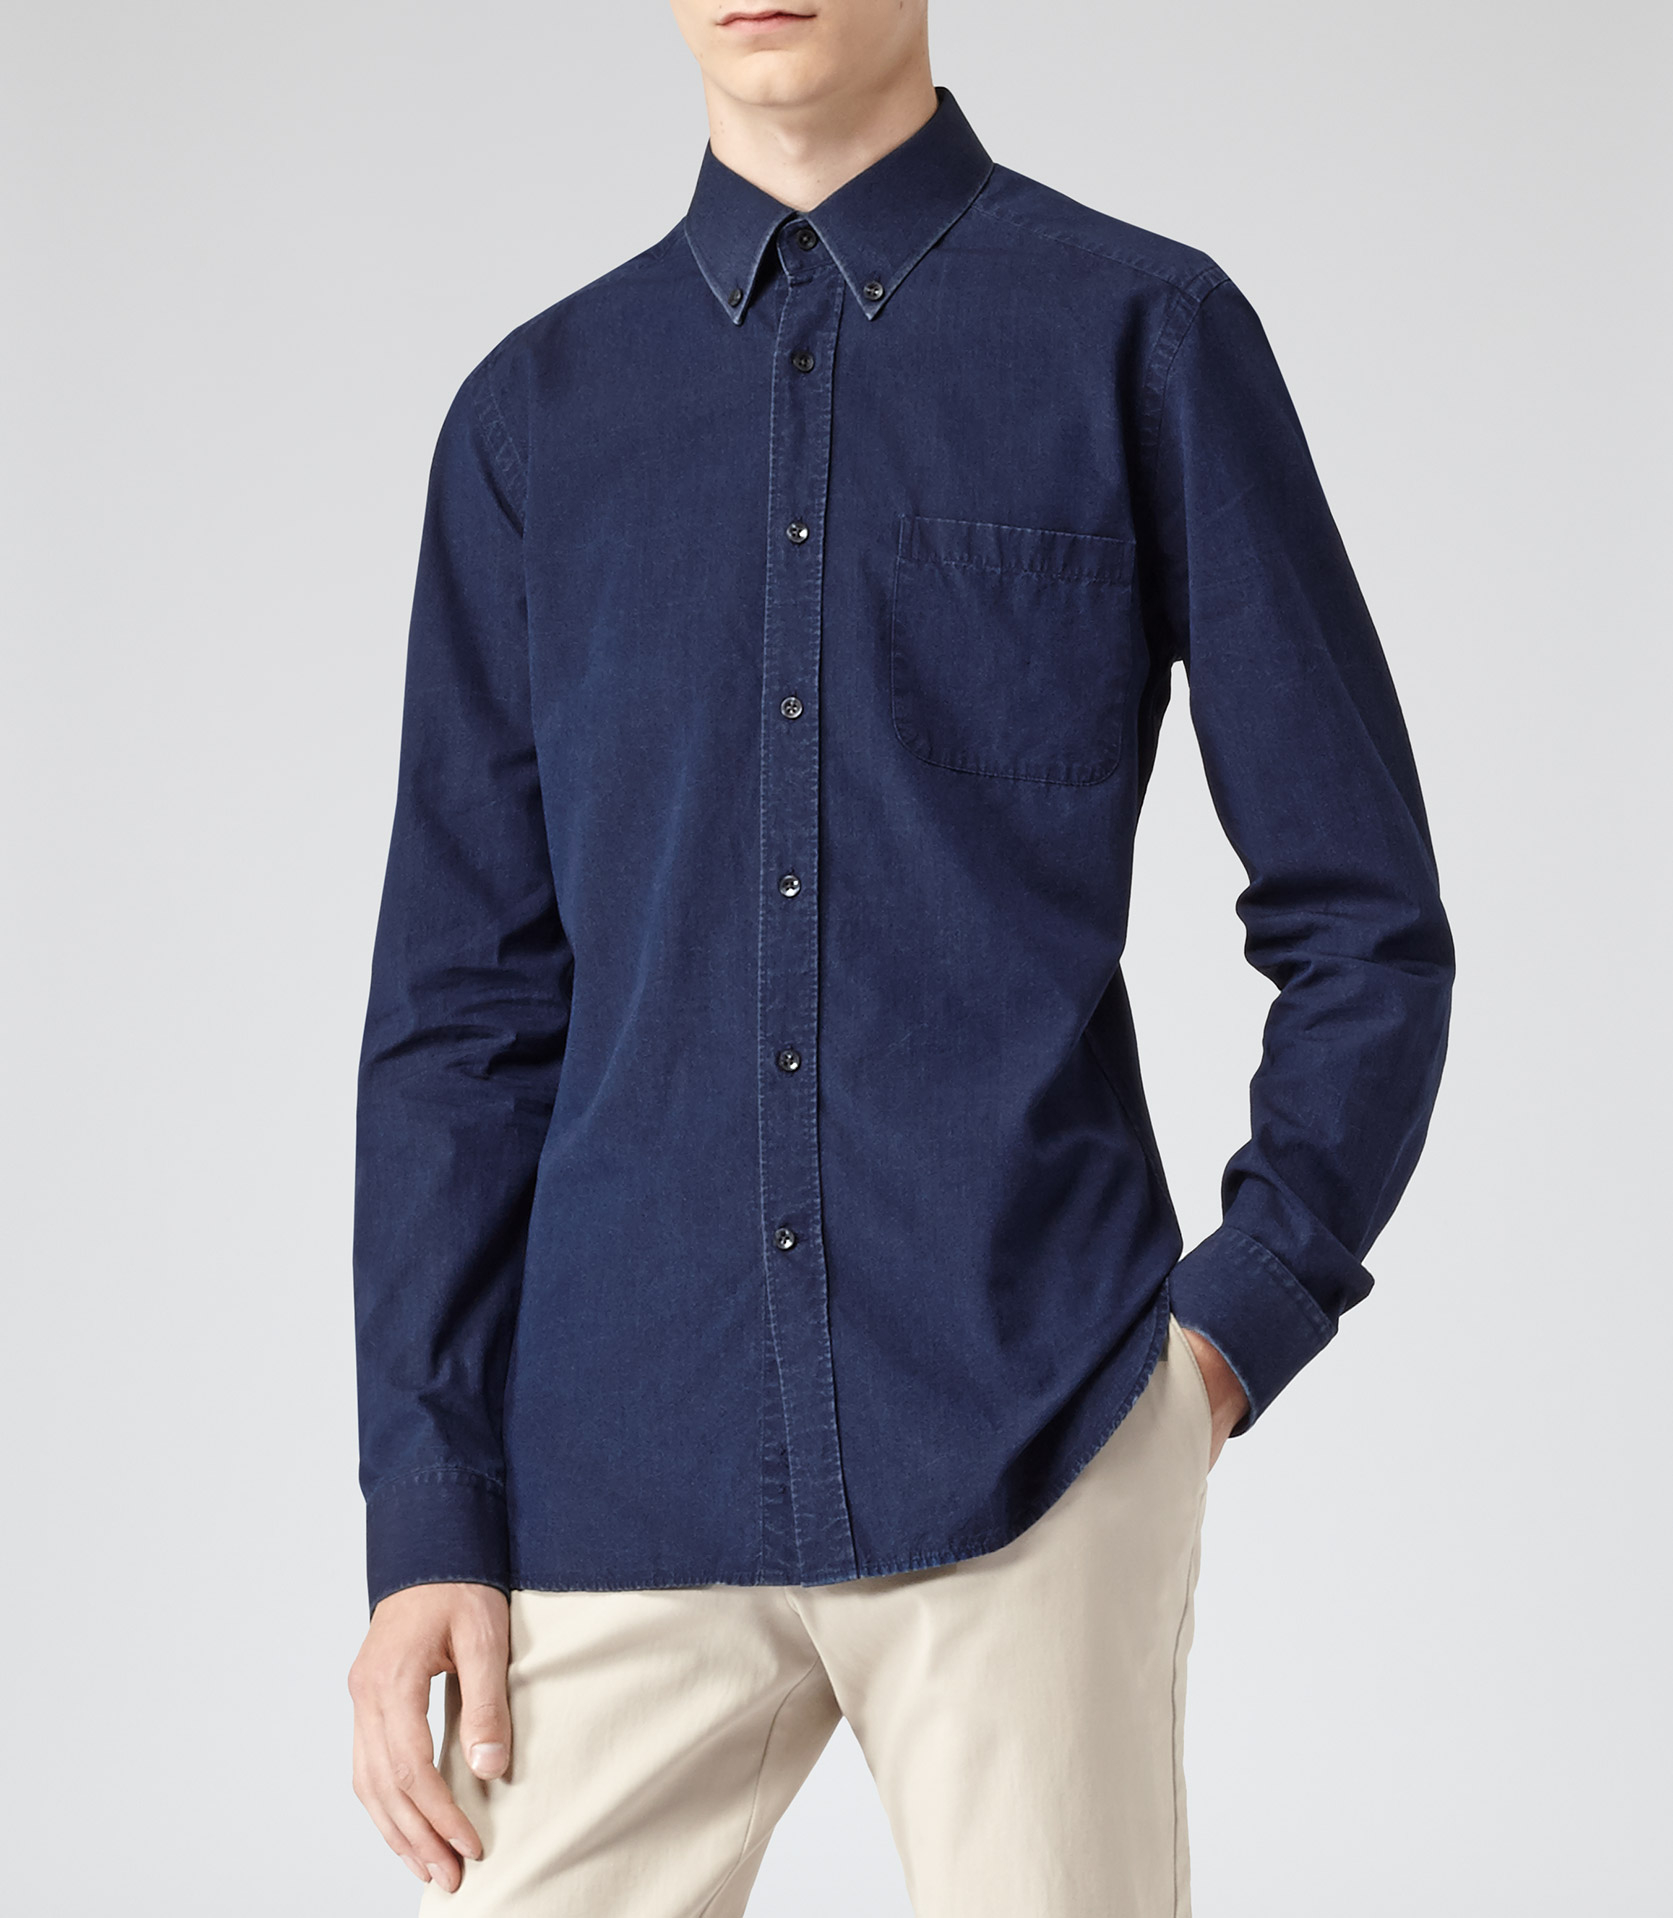 Reiss Demetri Dark Denim Shirt in Indigo (Blue) for Men - Lyst